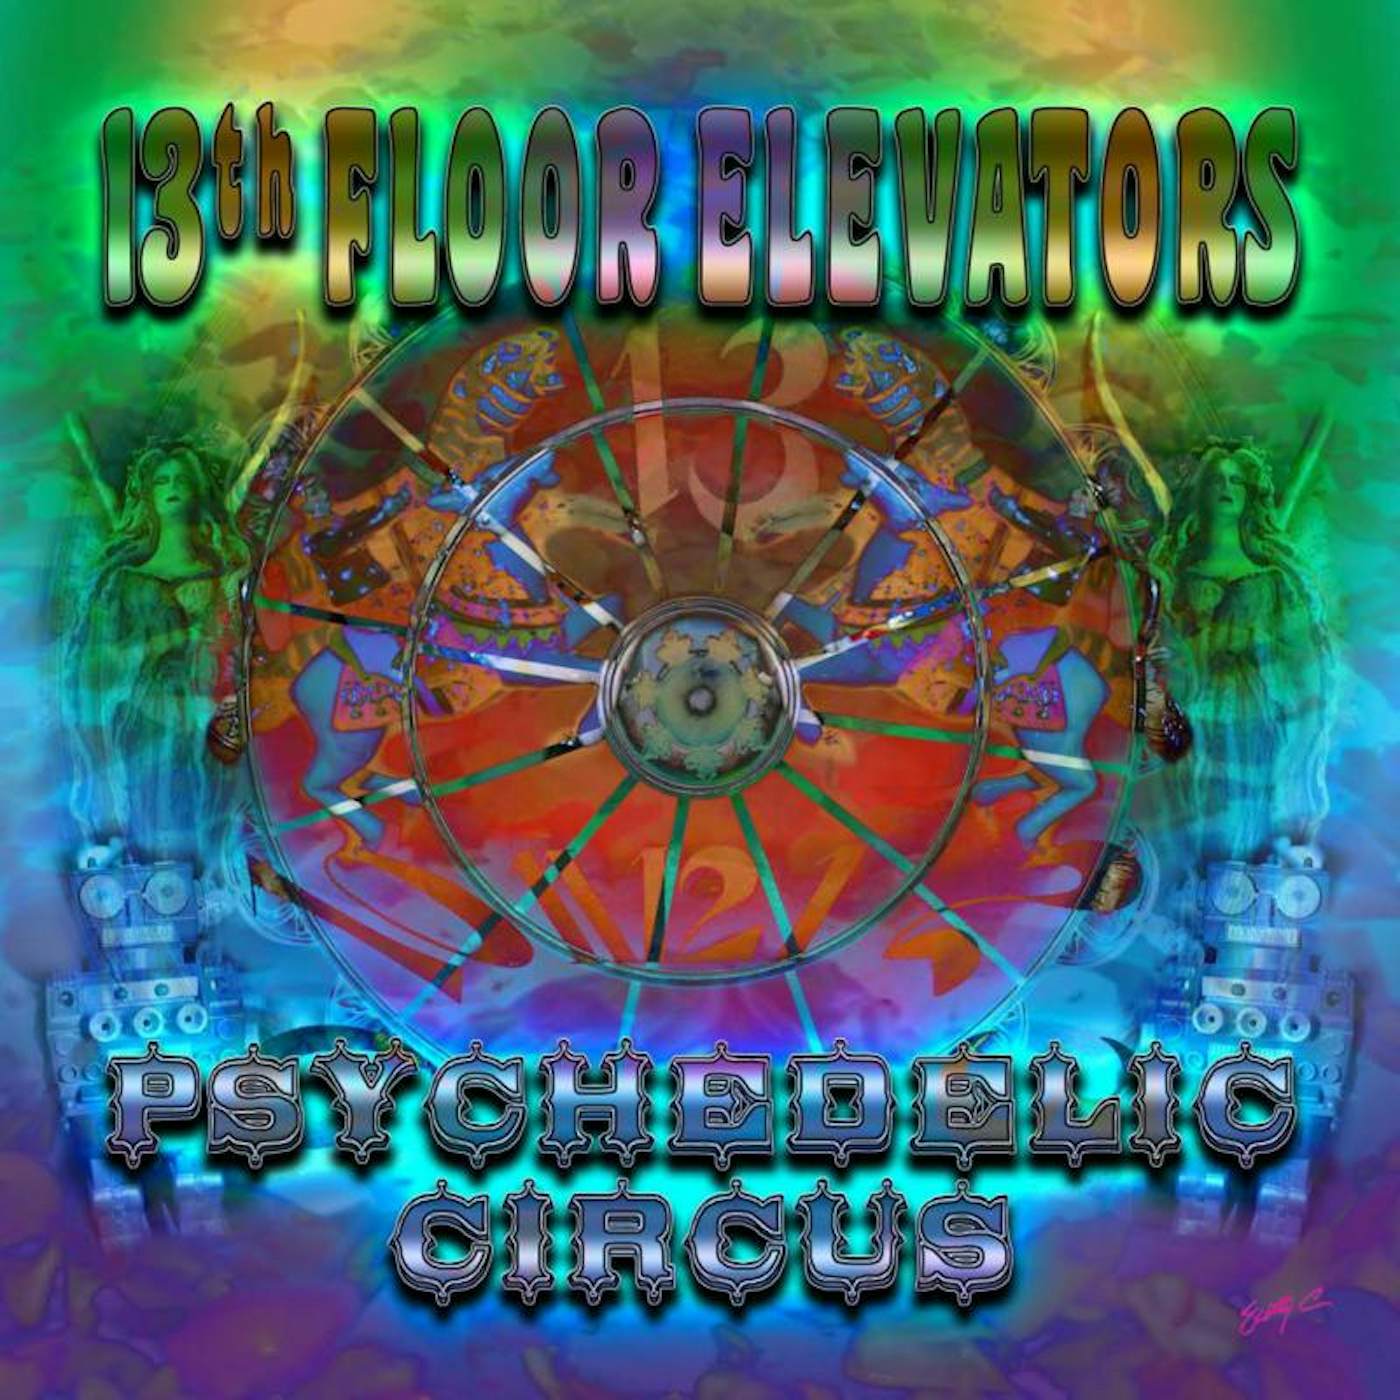 13Th Floor Elevators CD - Psychedelic Circus